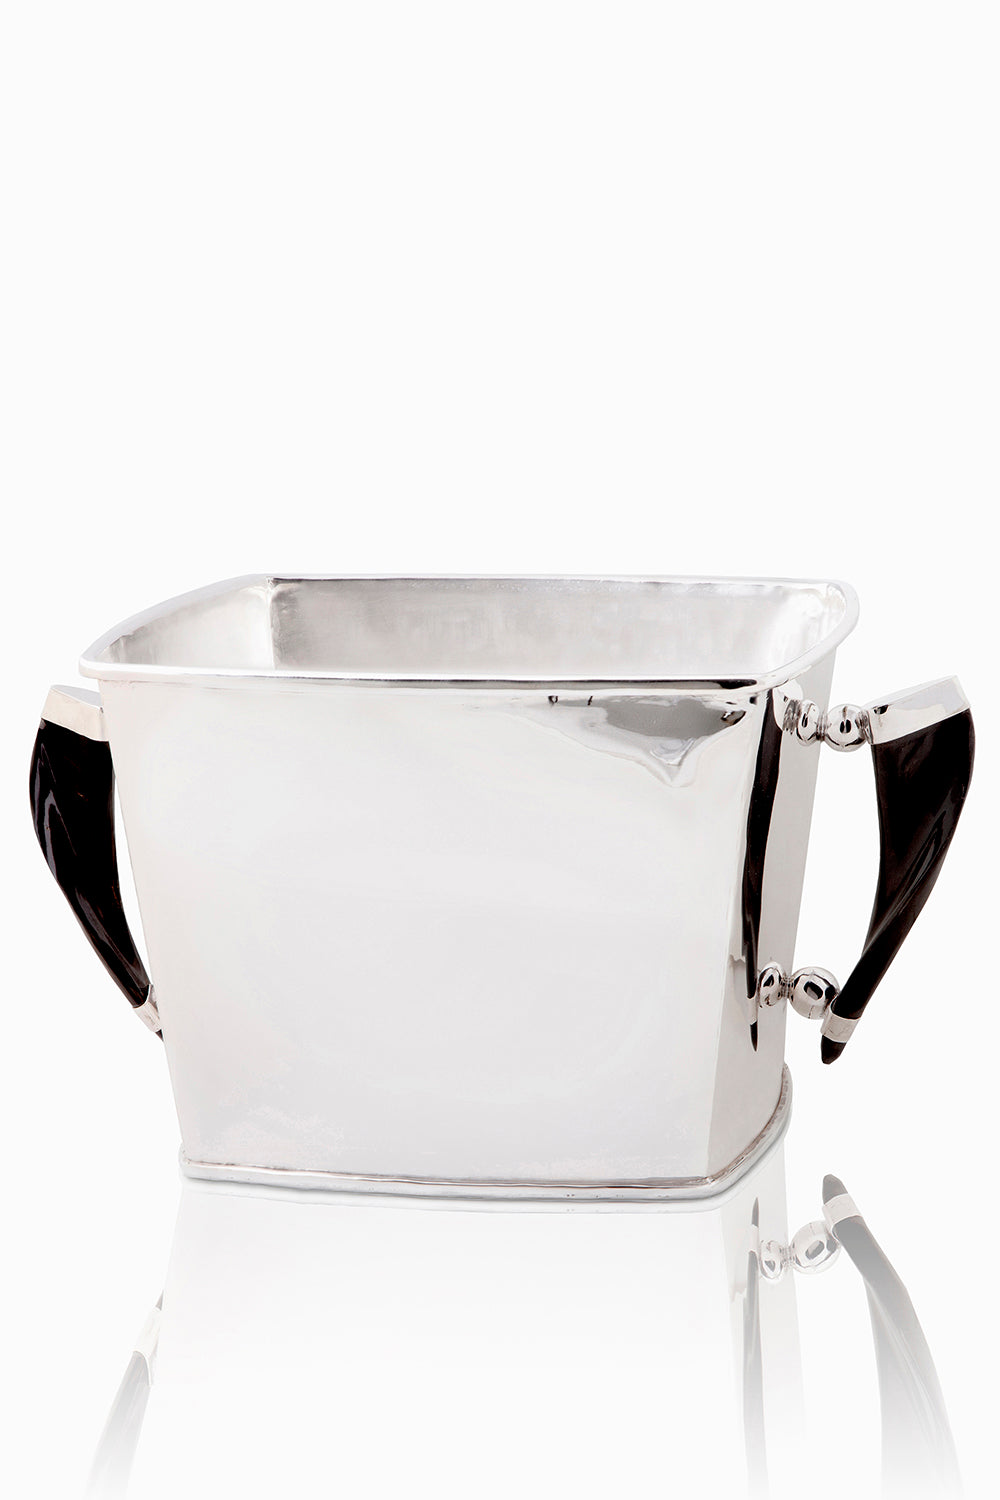 Palpala Big Square Bucket, Black Horn, Polished Silver Media 1 of 3Palpala Big Square Bucket, Black Horn, Polished Silver